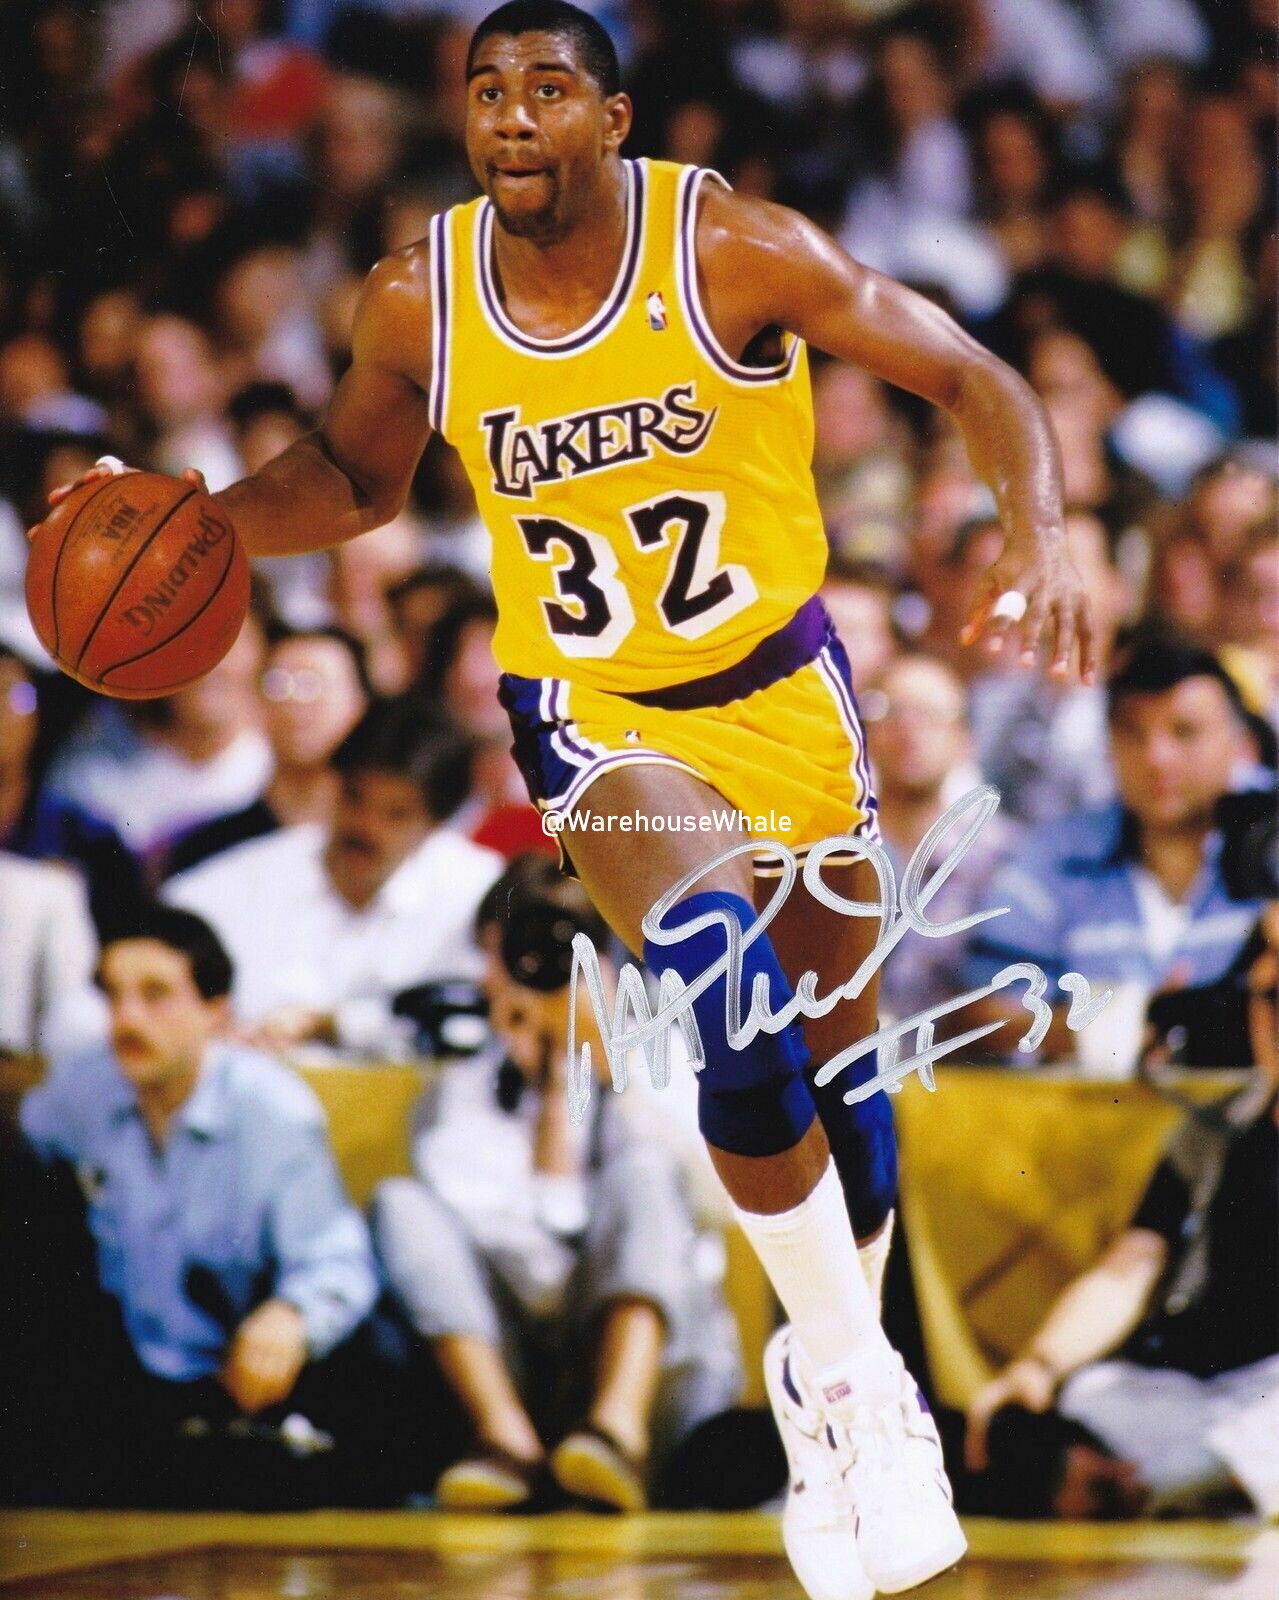 Magic Johnson Autographed Signed 8x10 Photo Poster painting (NBA HOF LA Lakers) REPRINT